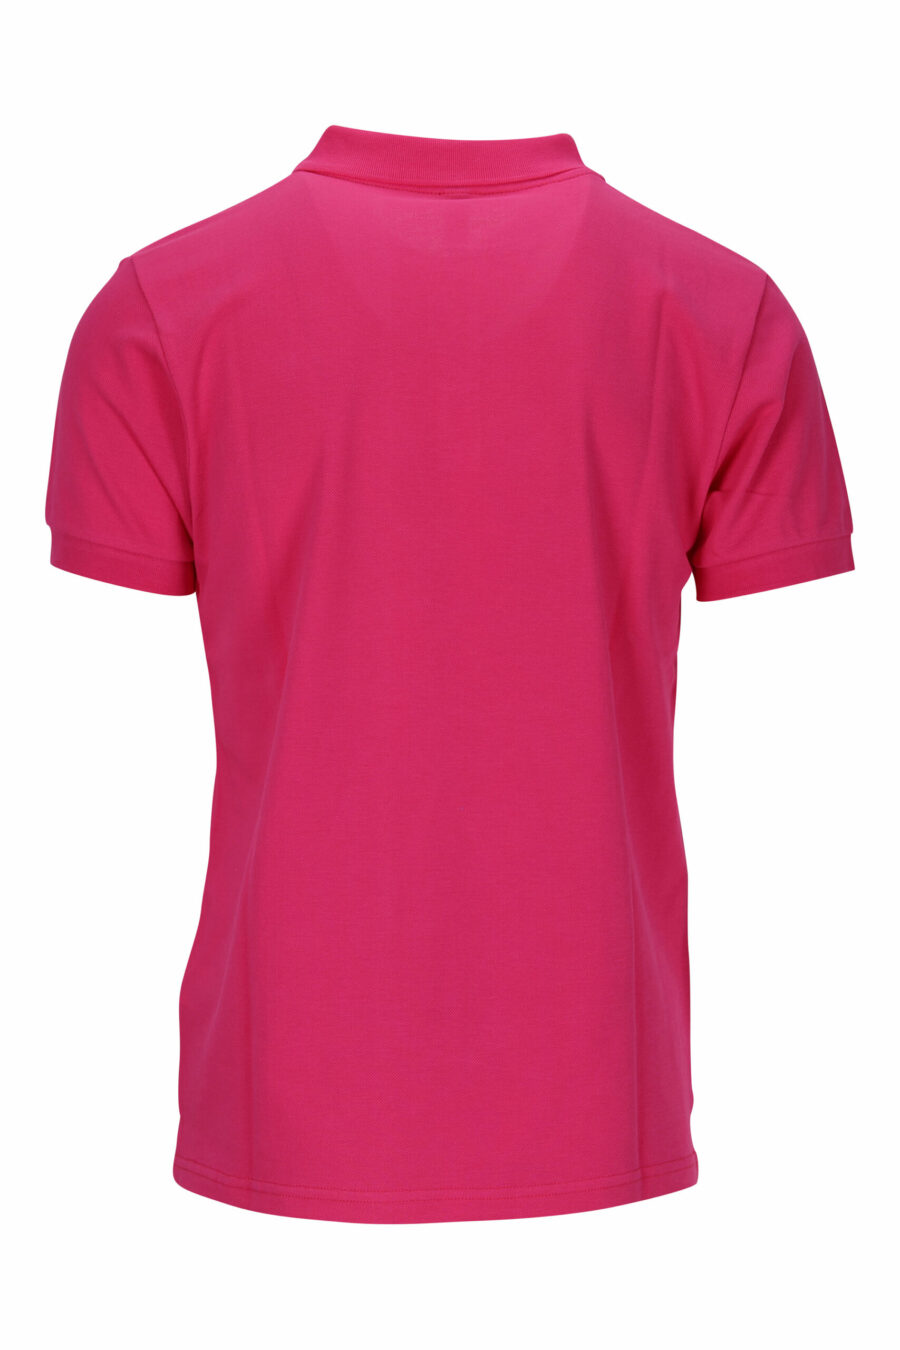 Fuchsia polo shirt with minilogue "swim" - 667113673769 1 scaled